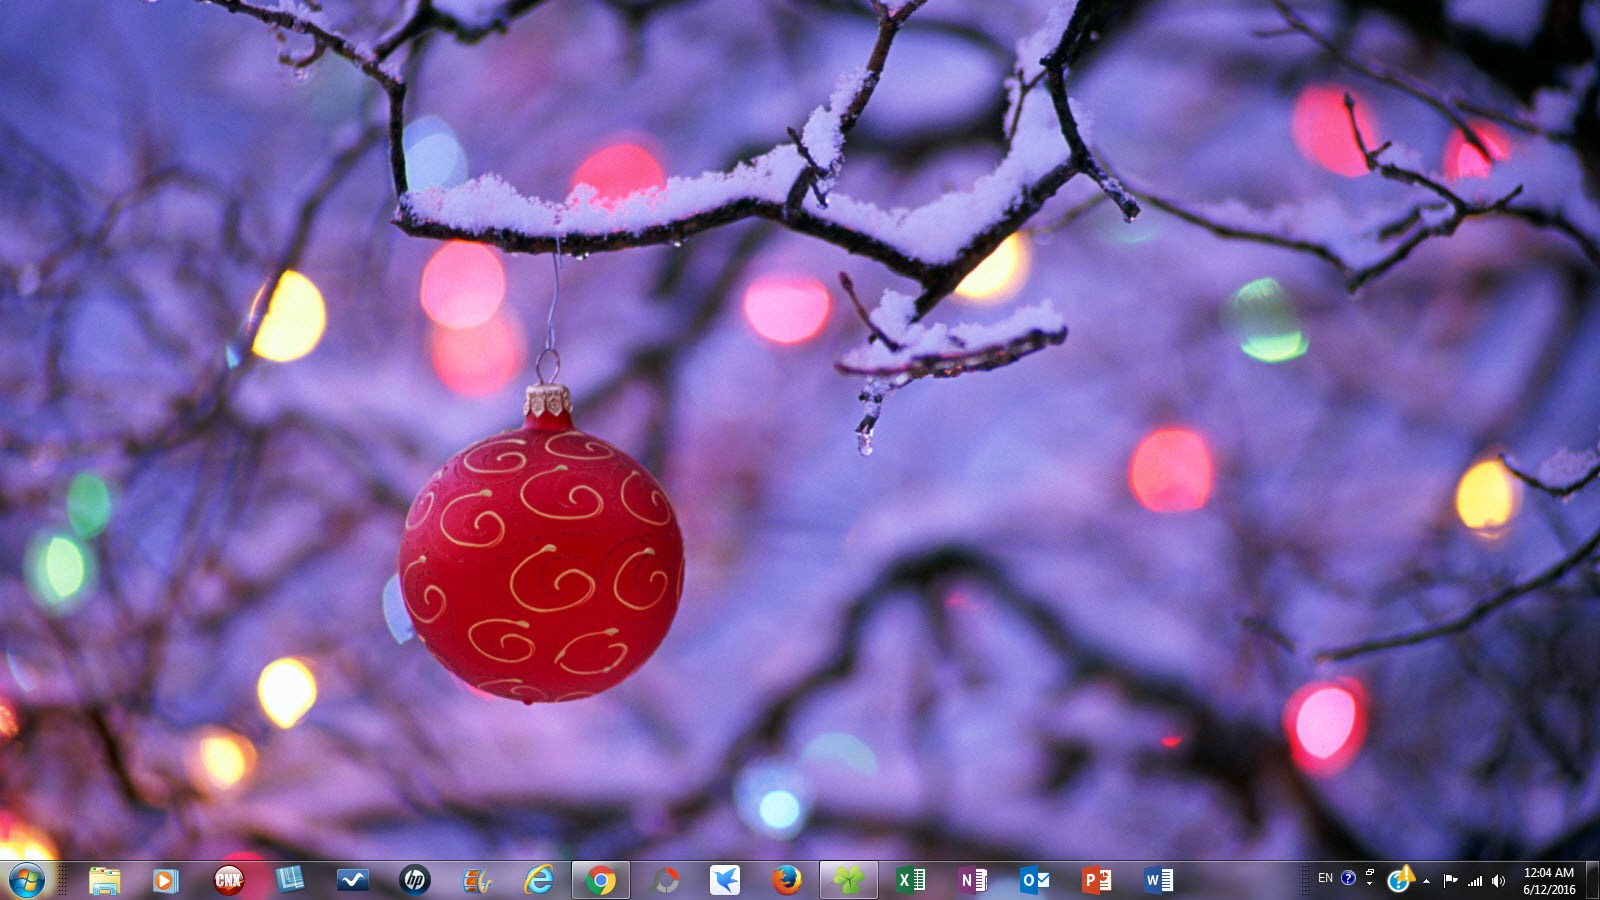 Windows 7 Christmas Theme - Christmas Hd Desktop Background - HD Wallpaper 